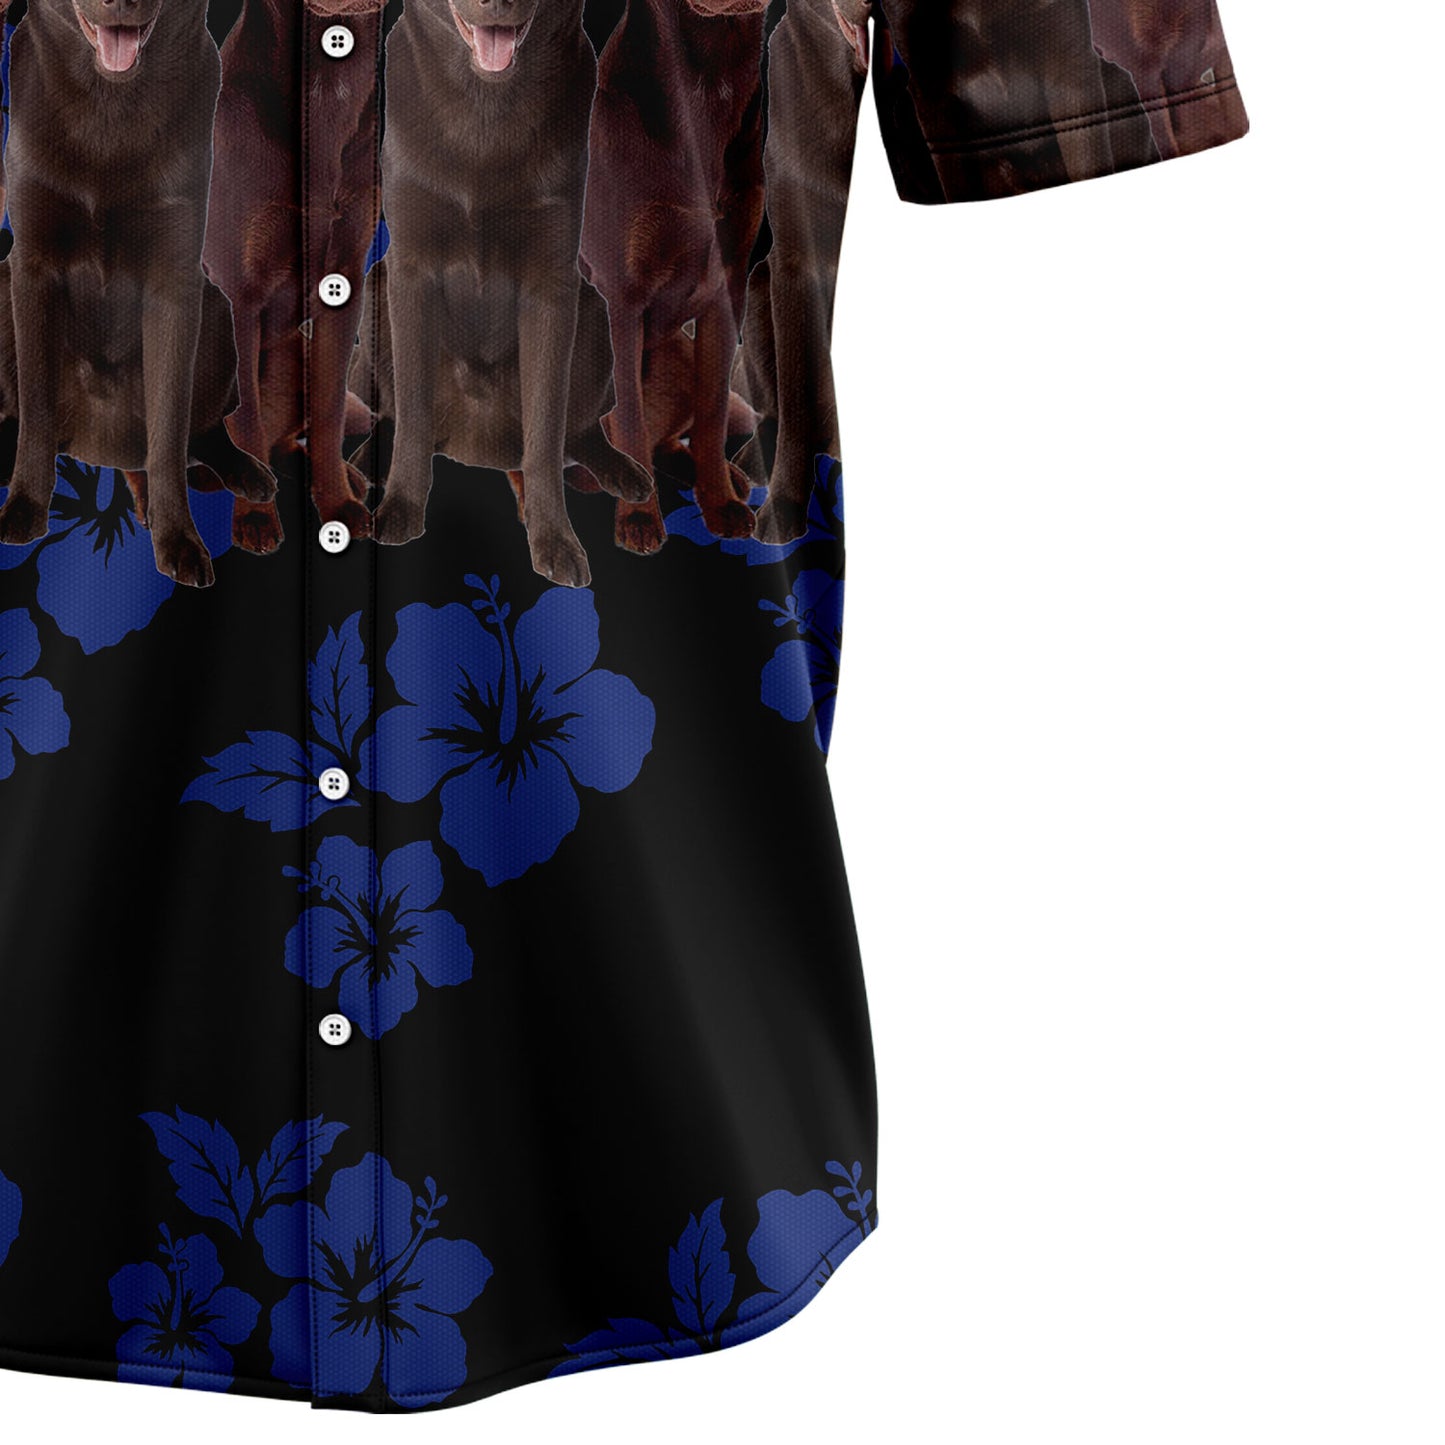 Awesome Australian Kelpie TG5724 Hawaiian Shirt